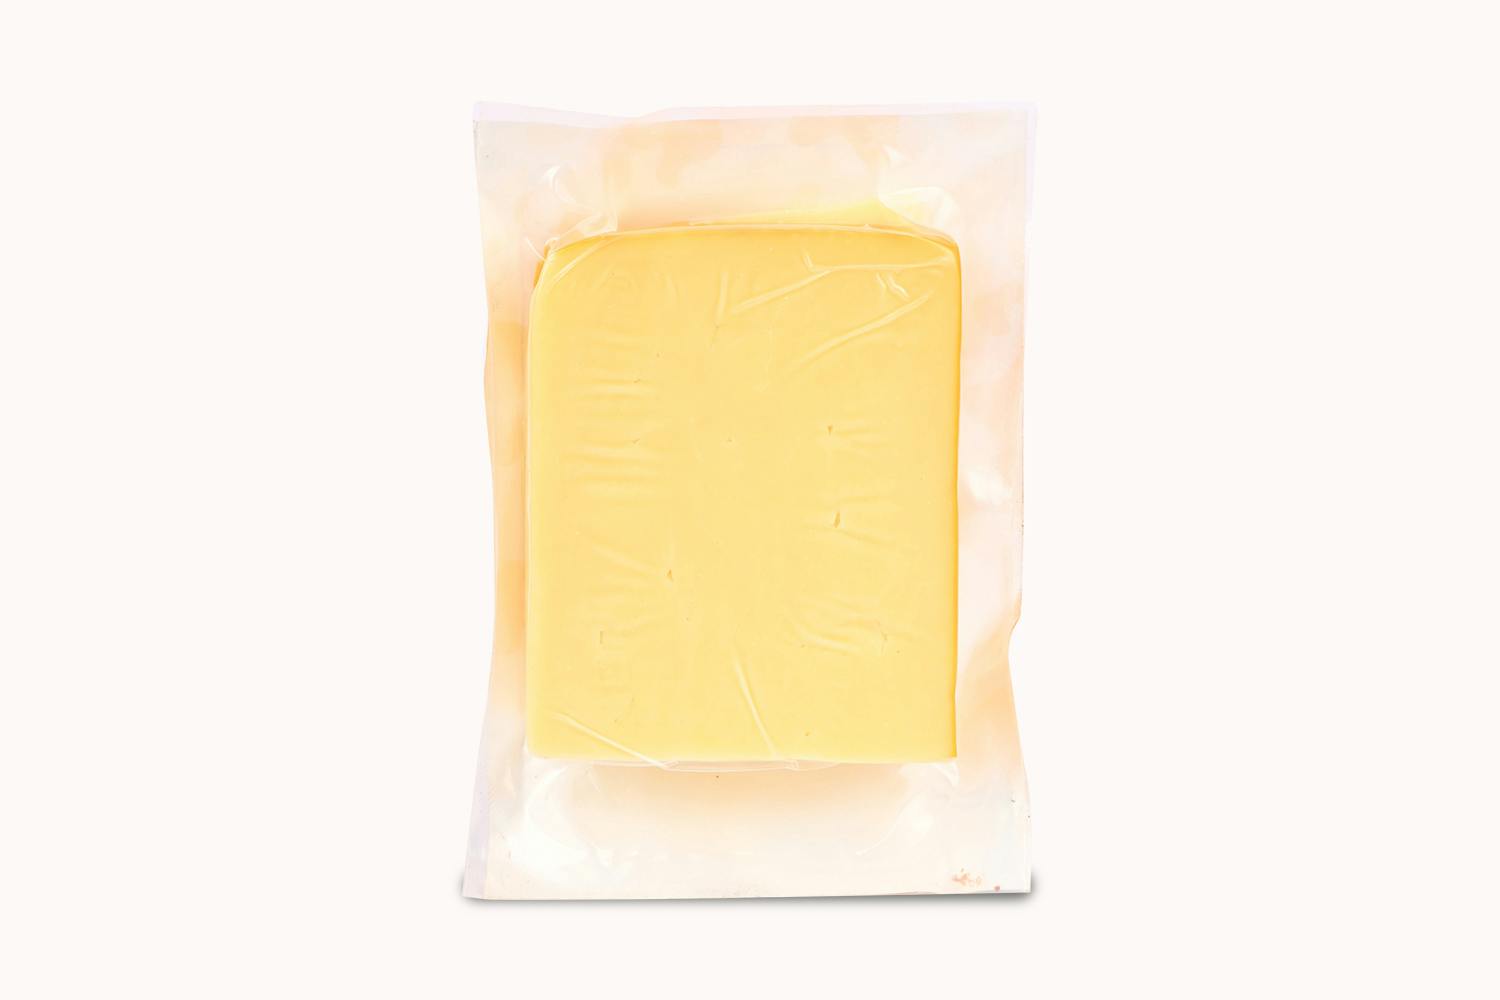 /k/o/kodai-cheese-gouda-pp-200g-2_v3oxunkszp6v80vc.jpg